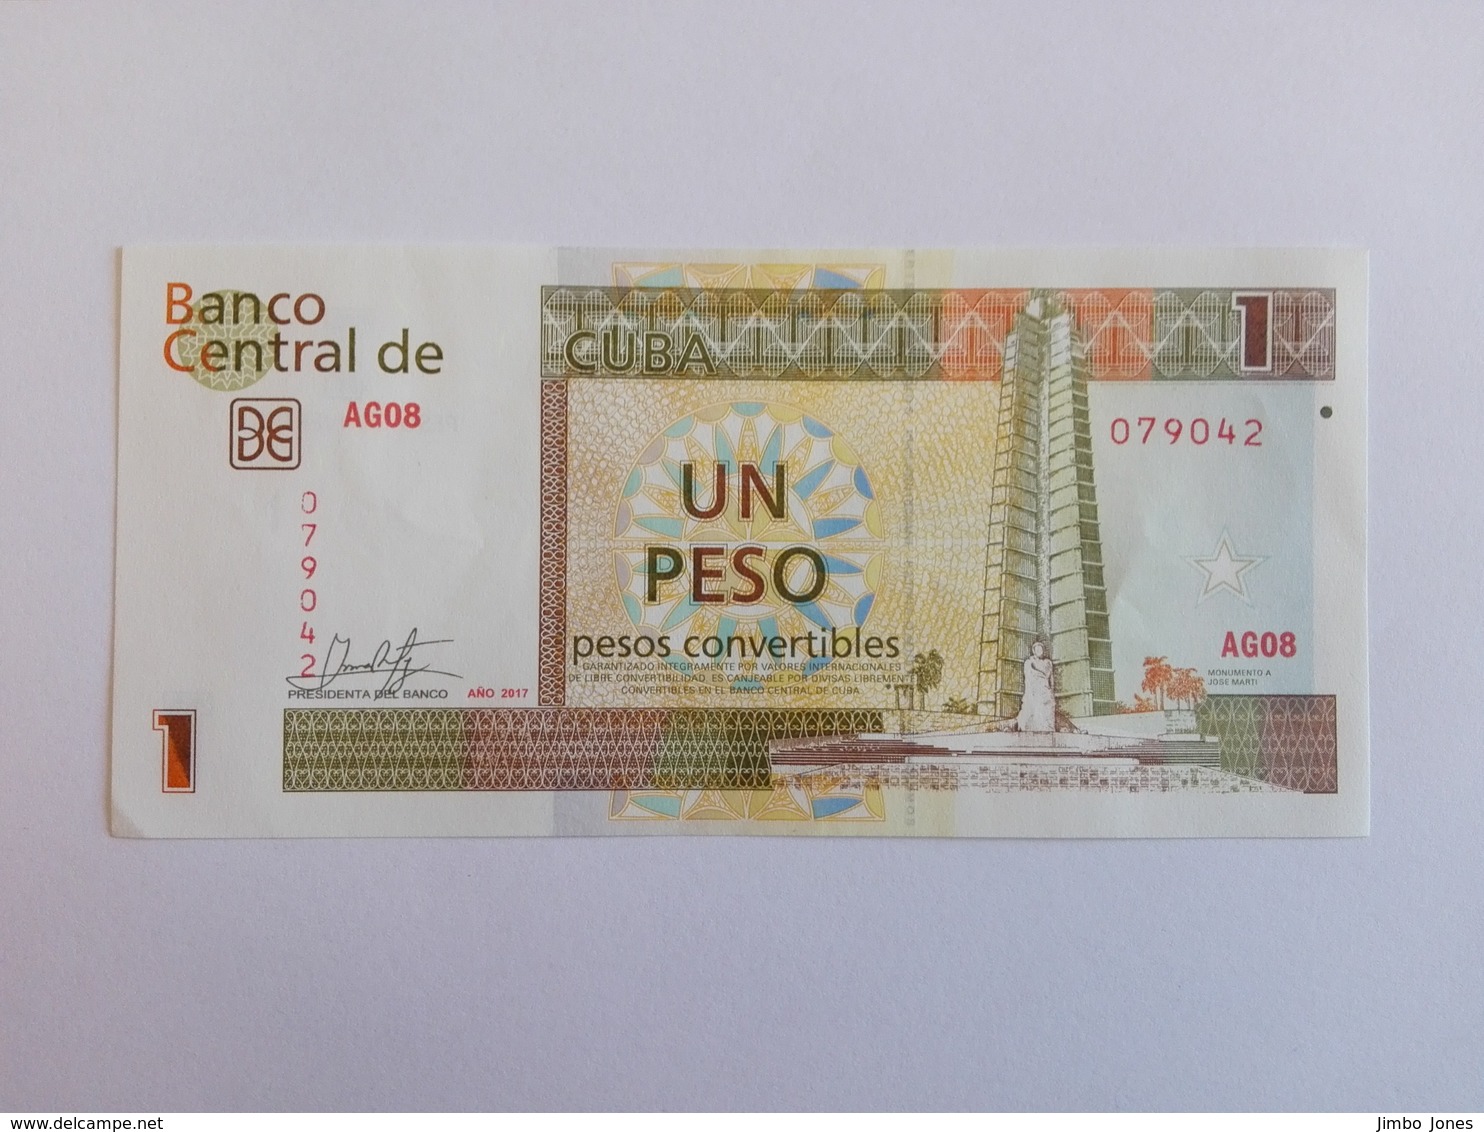 1 Peso Convertible (CUC) Banknote Aus Kuba Von 2017 (fast Kassenfrisch) - Cuba